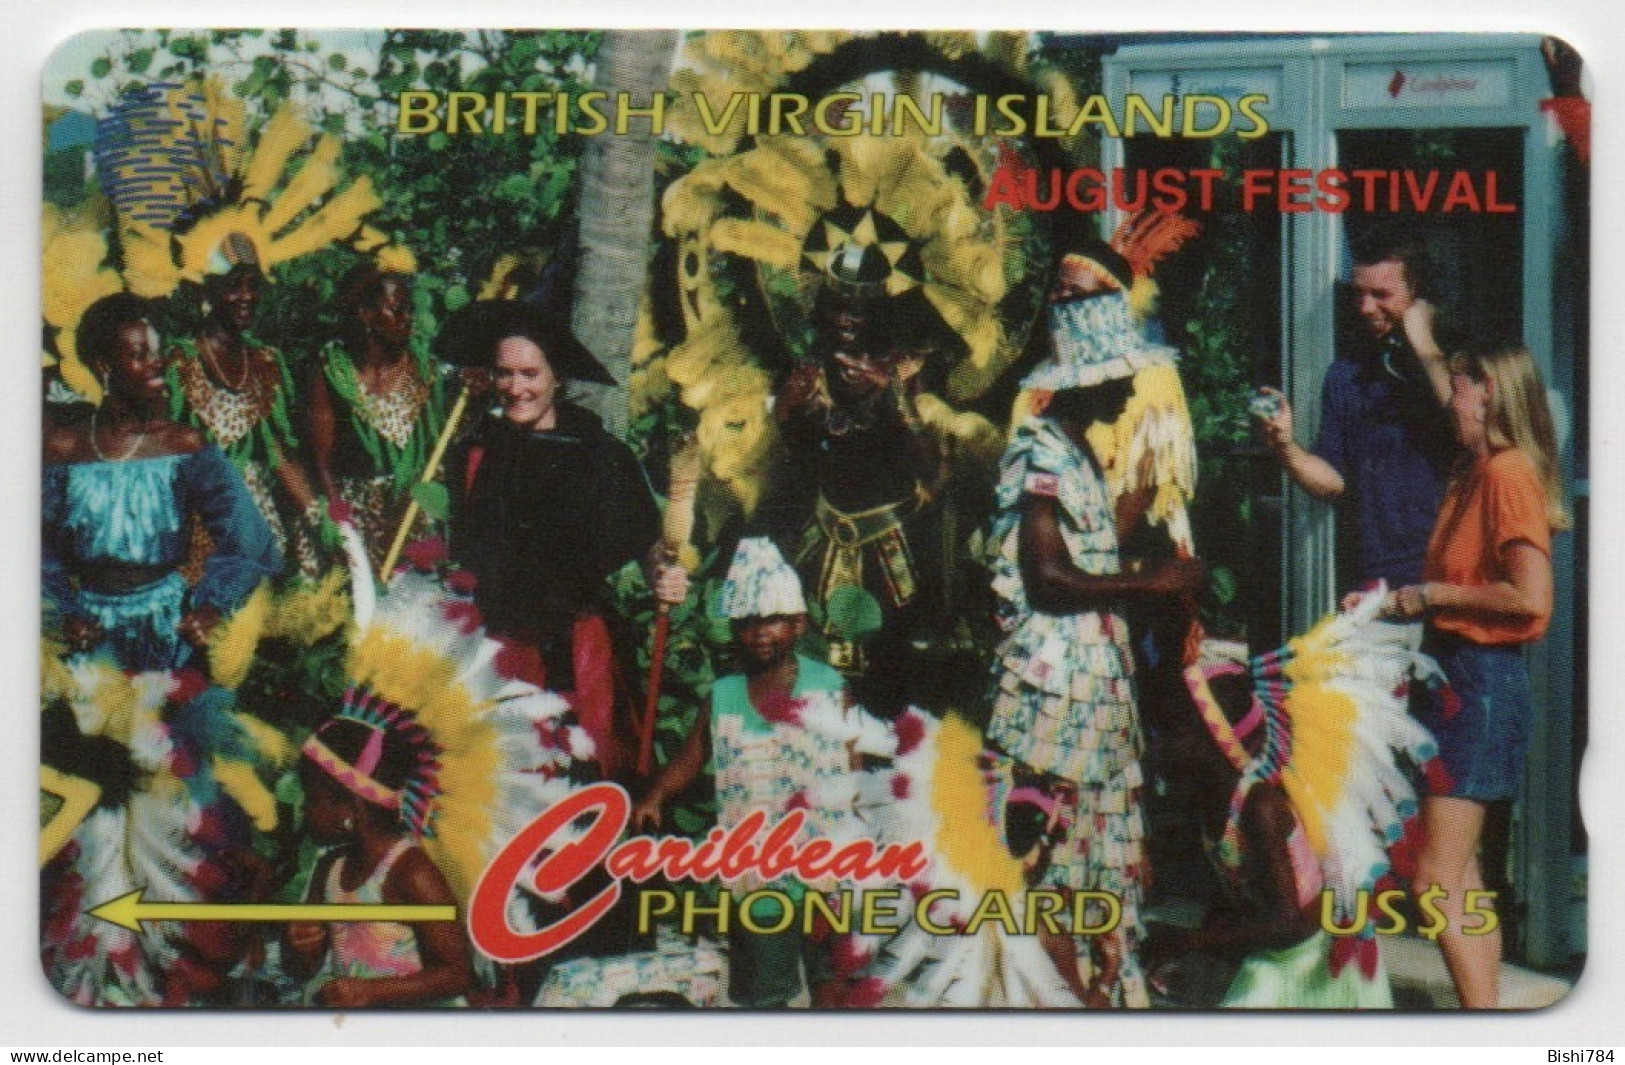 British Virgin Islands - August Festival - 103CBVH - Virgin Islands